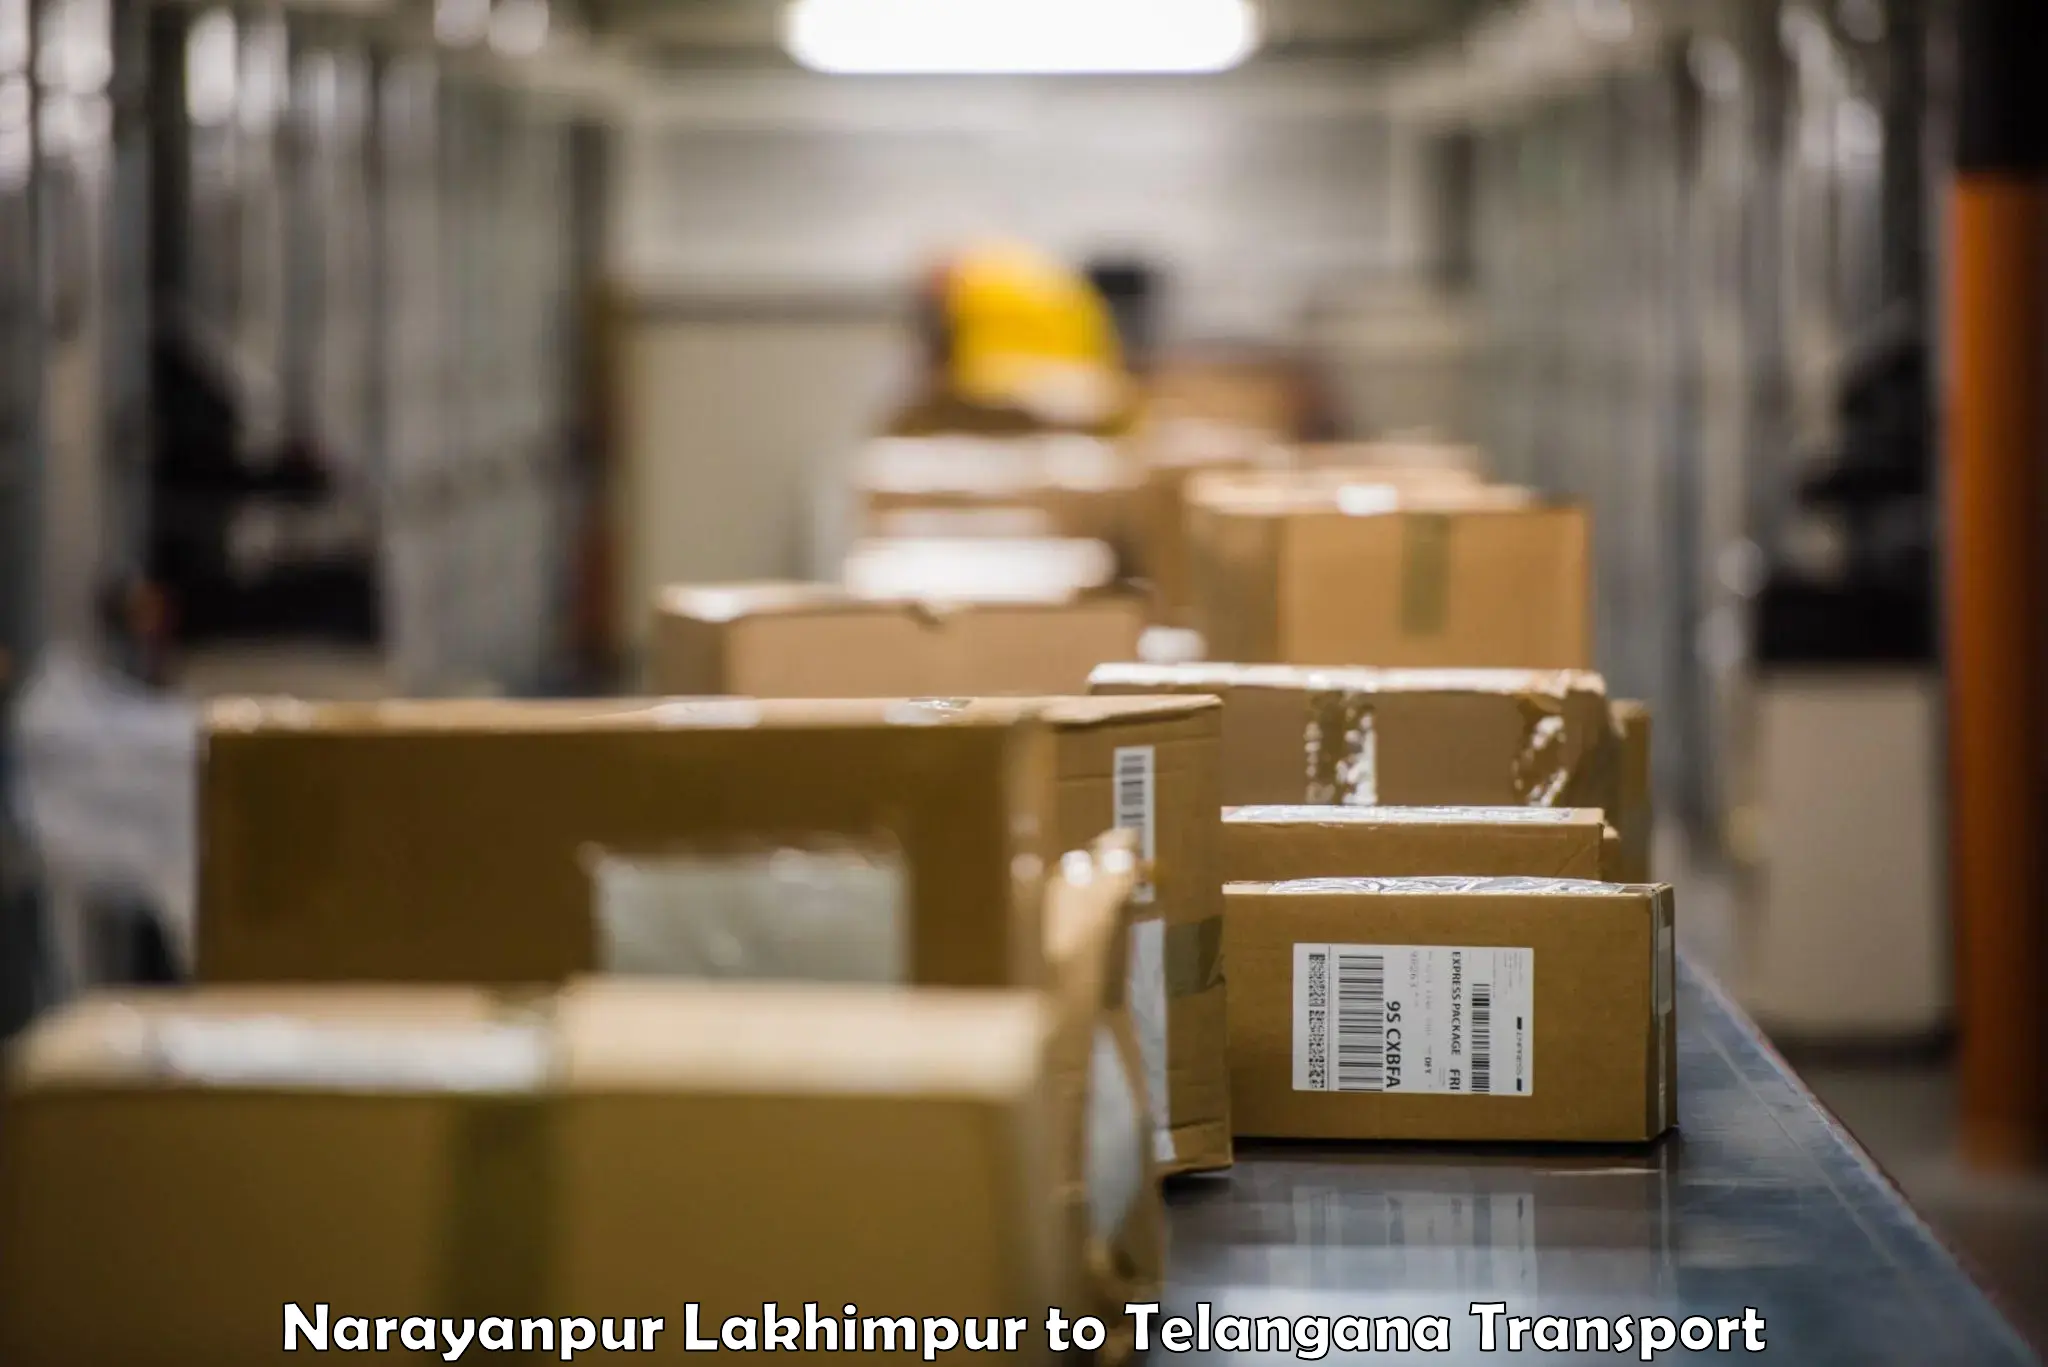 Shipping partner Narayanpur Lakhimpur to Manopad